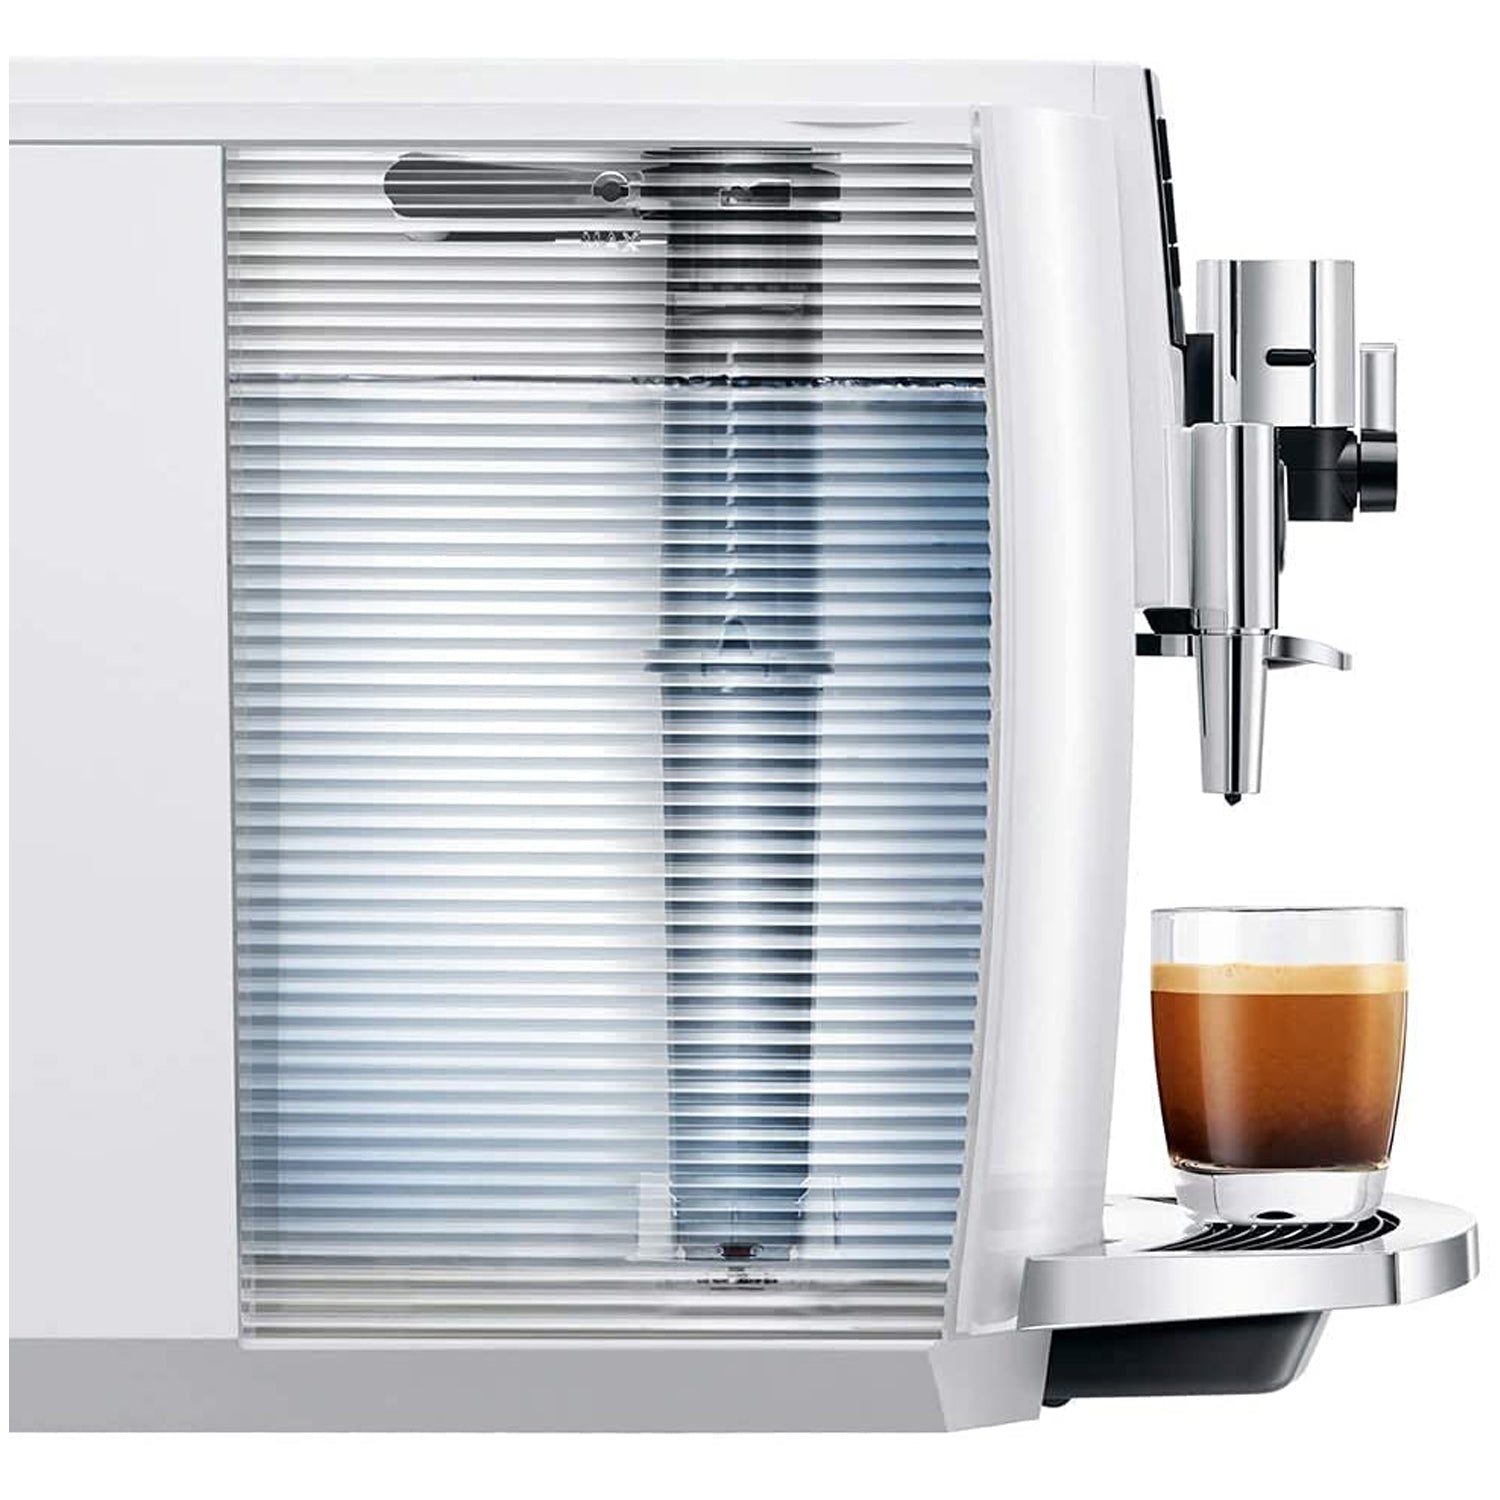 JURA E8 Automatic Coffee Machine